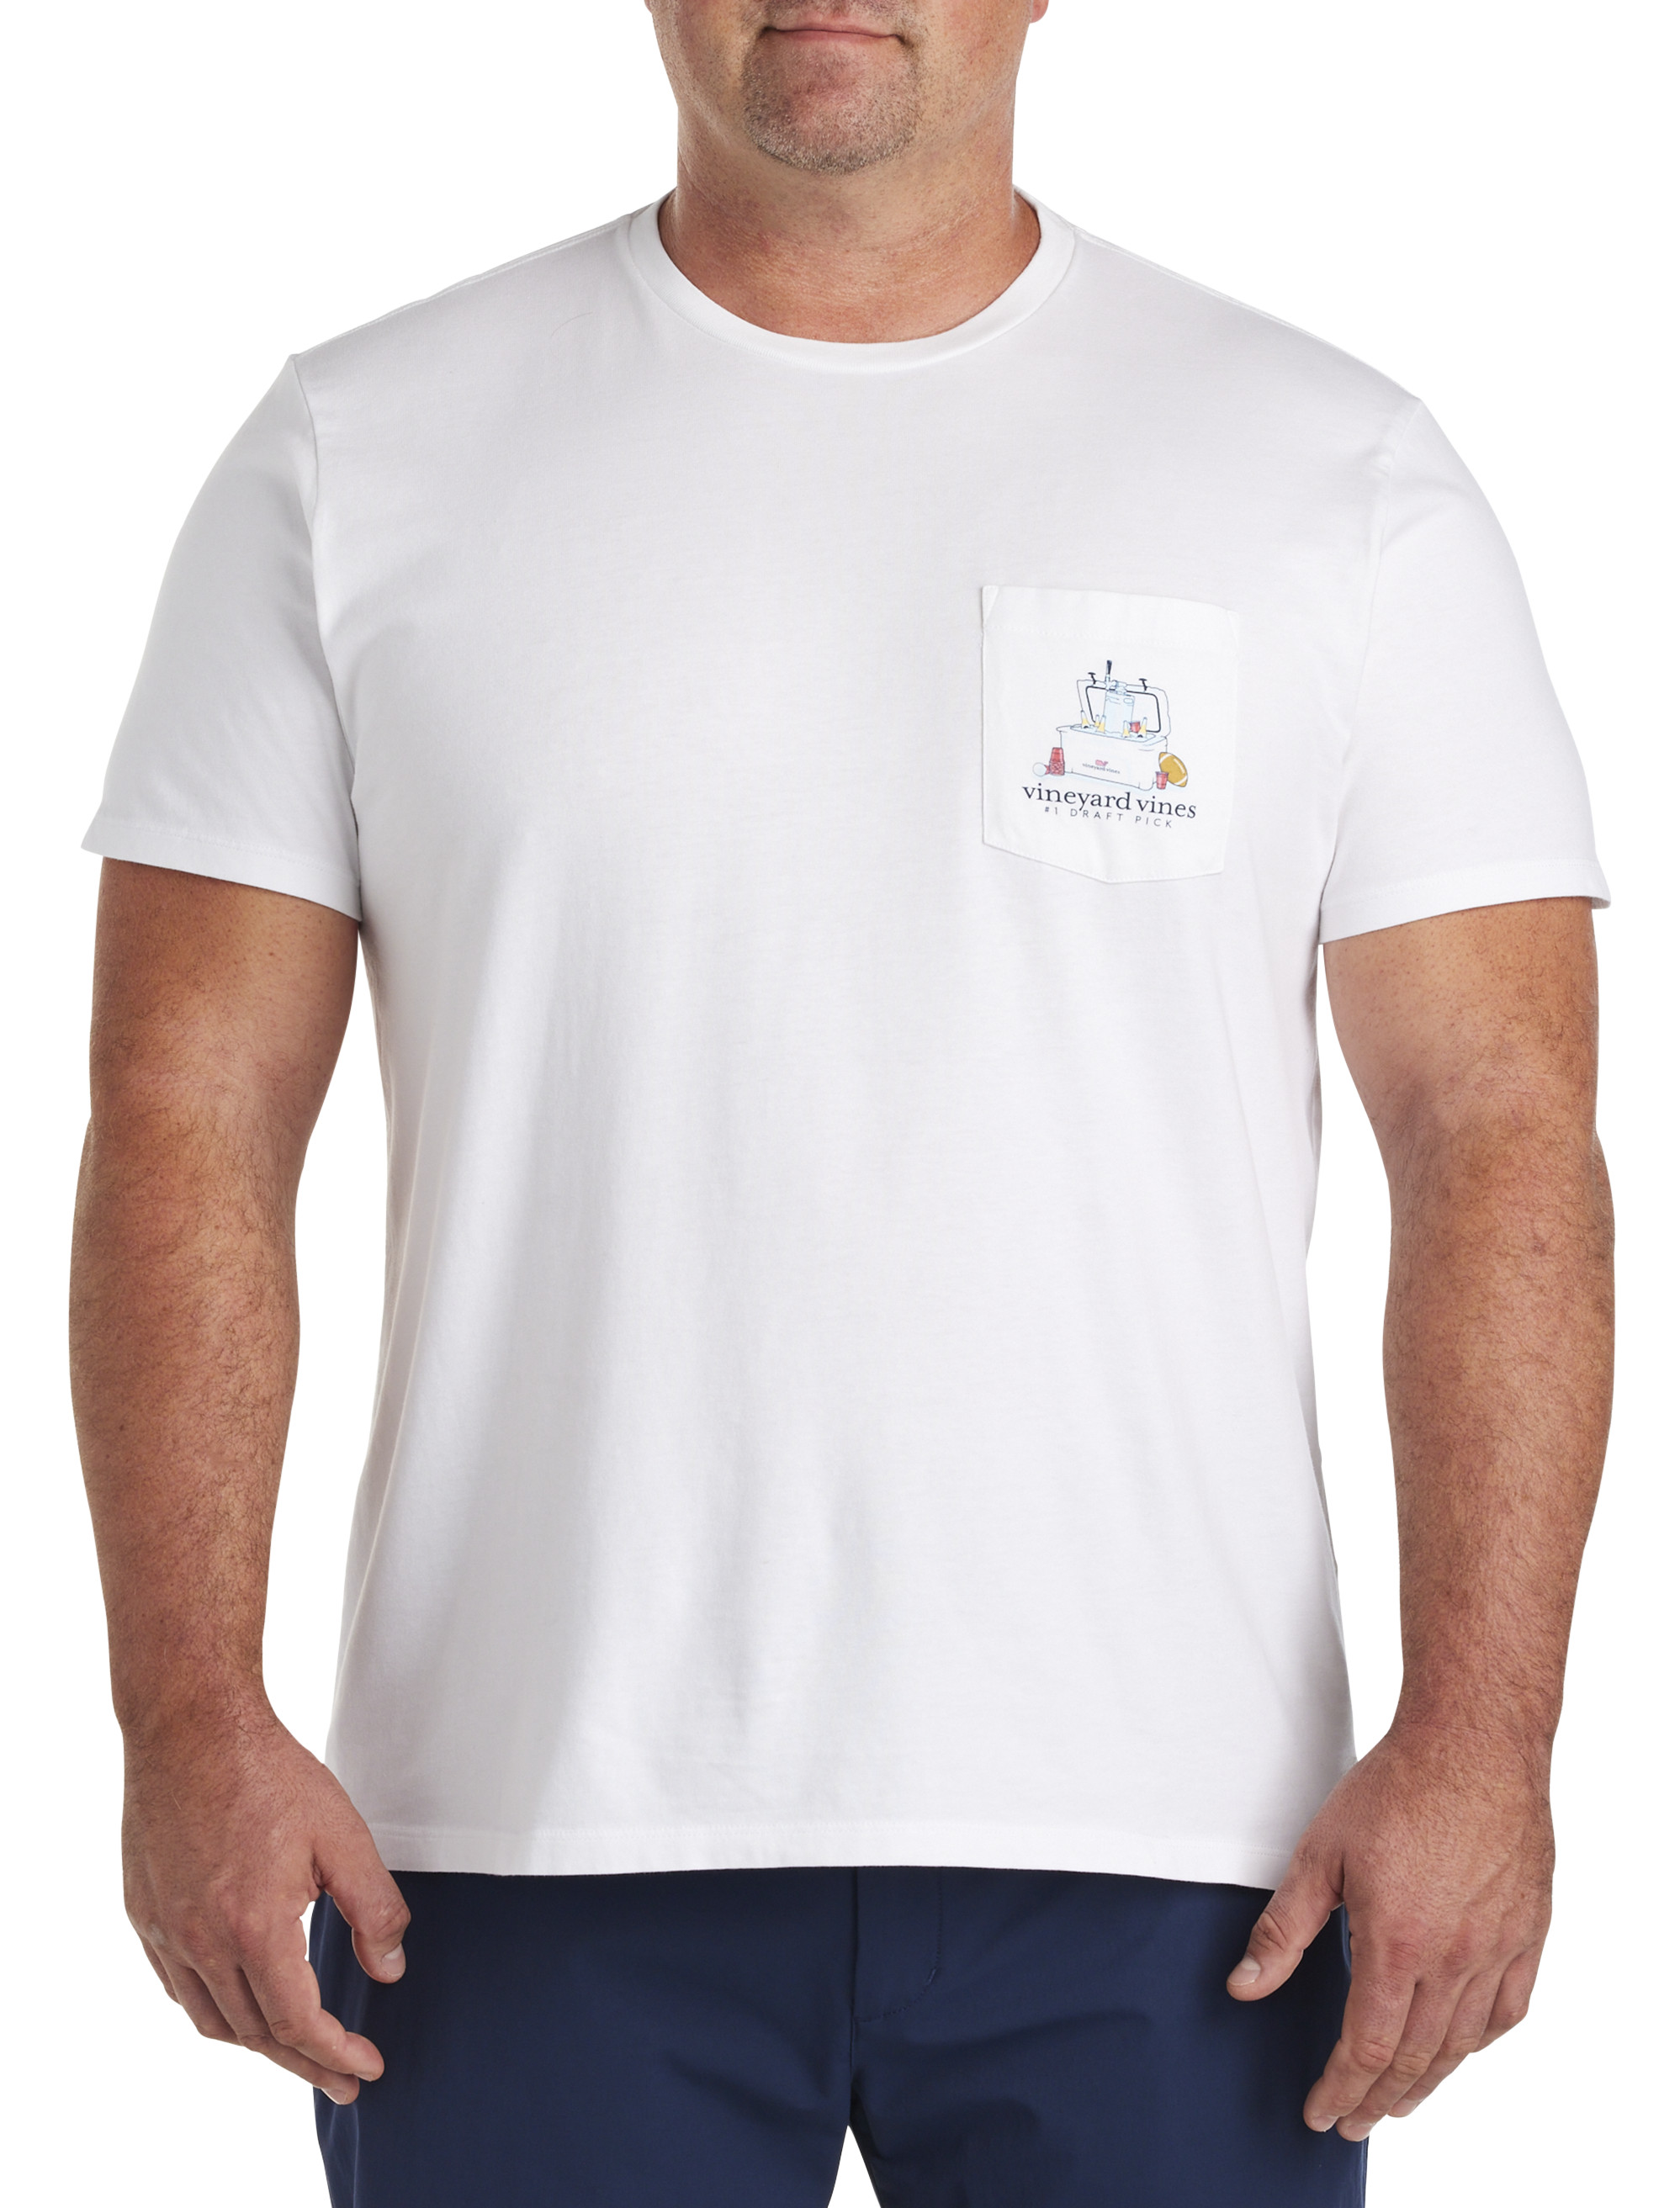 Vineyard Vines USA Mountain Dog Short Sleeve T-Shirt